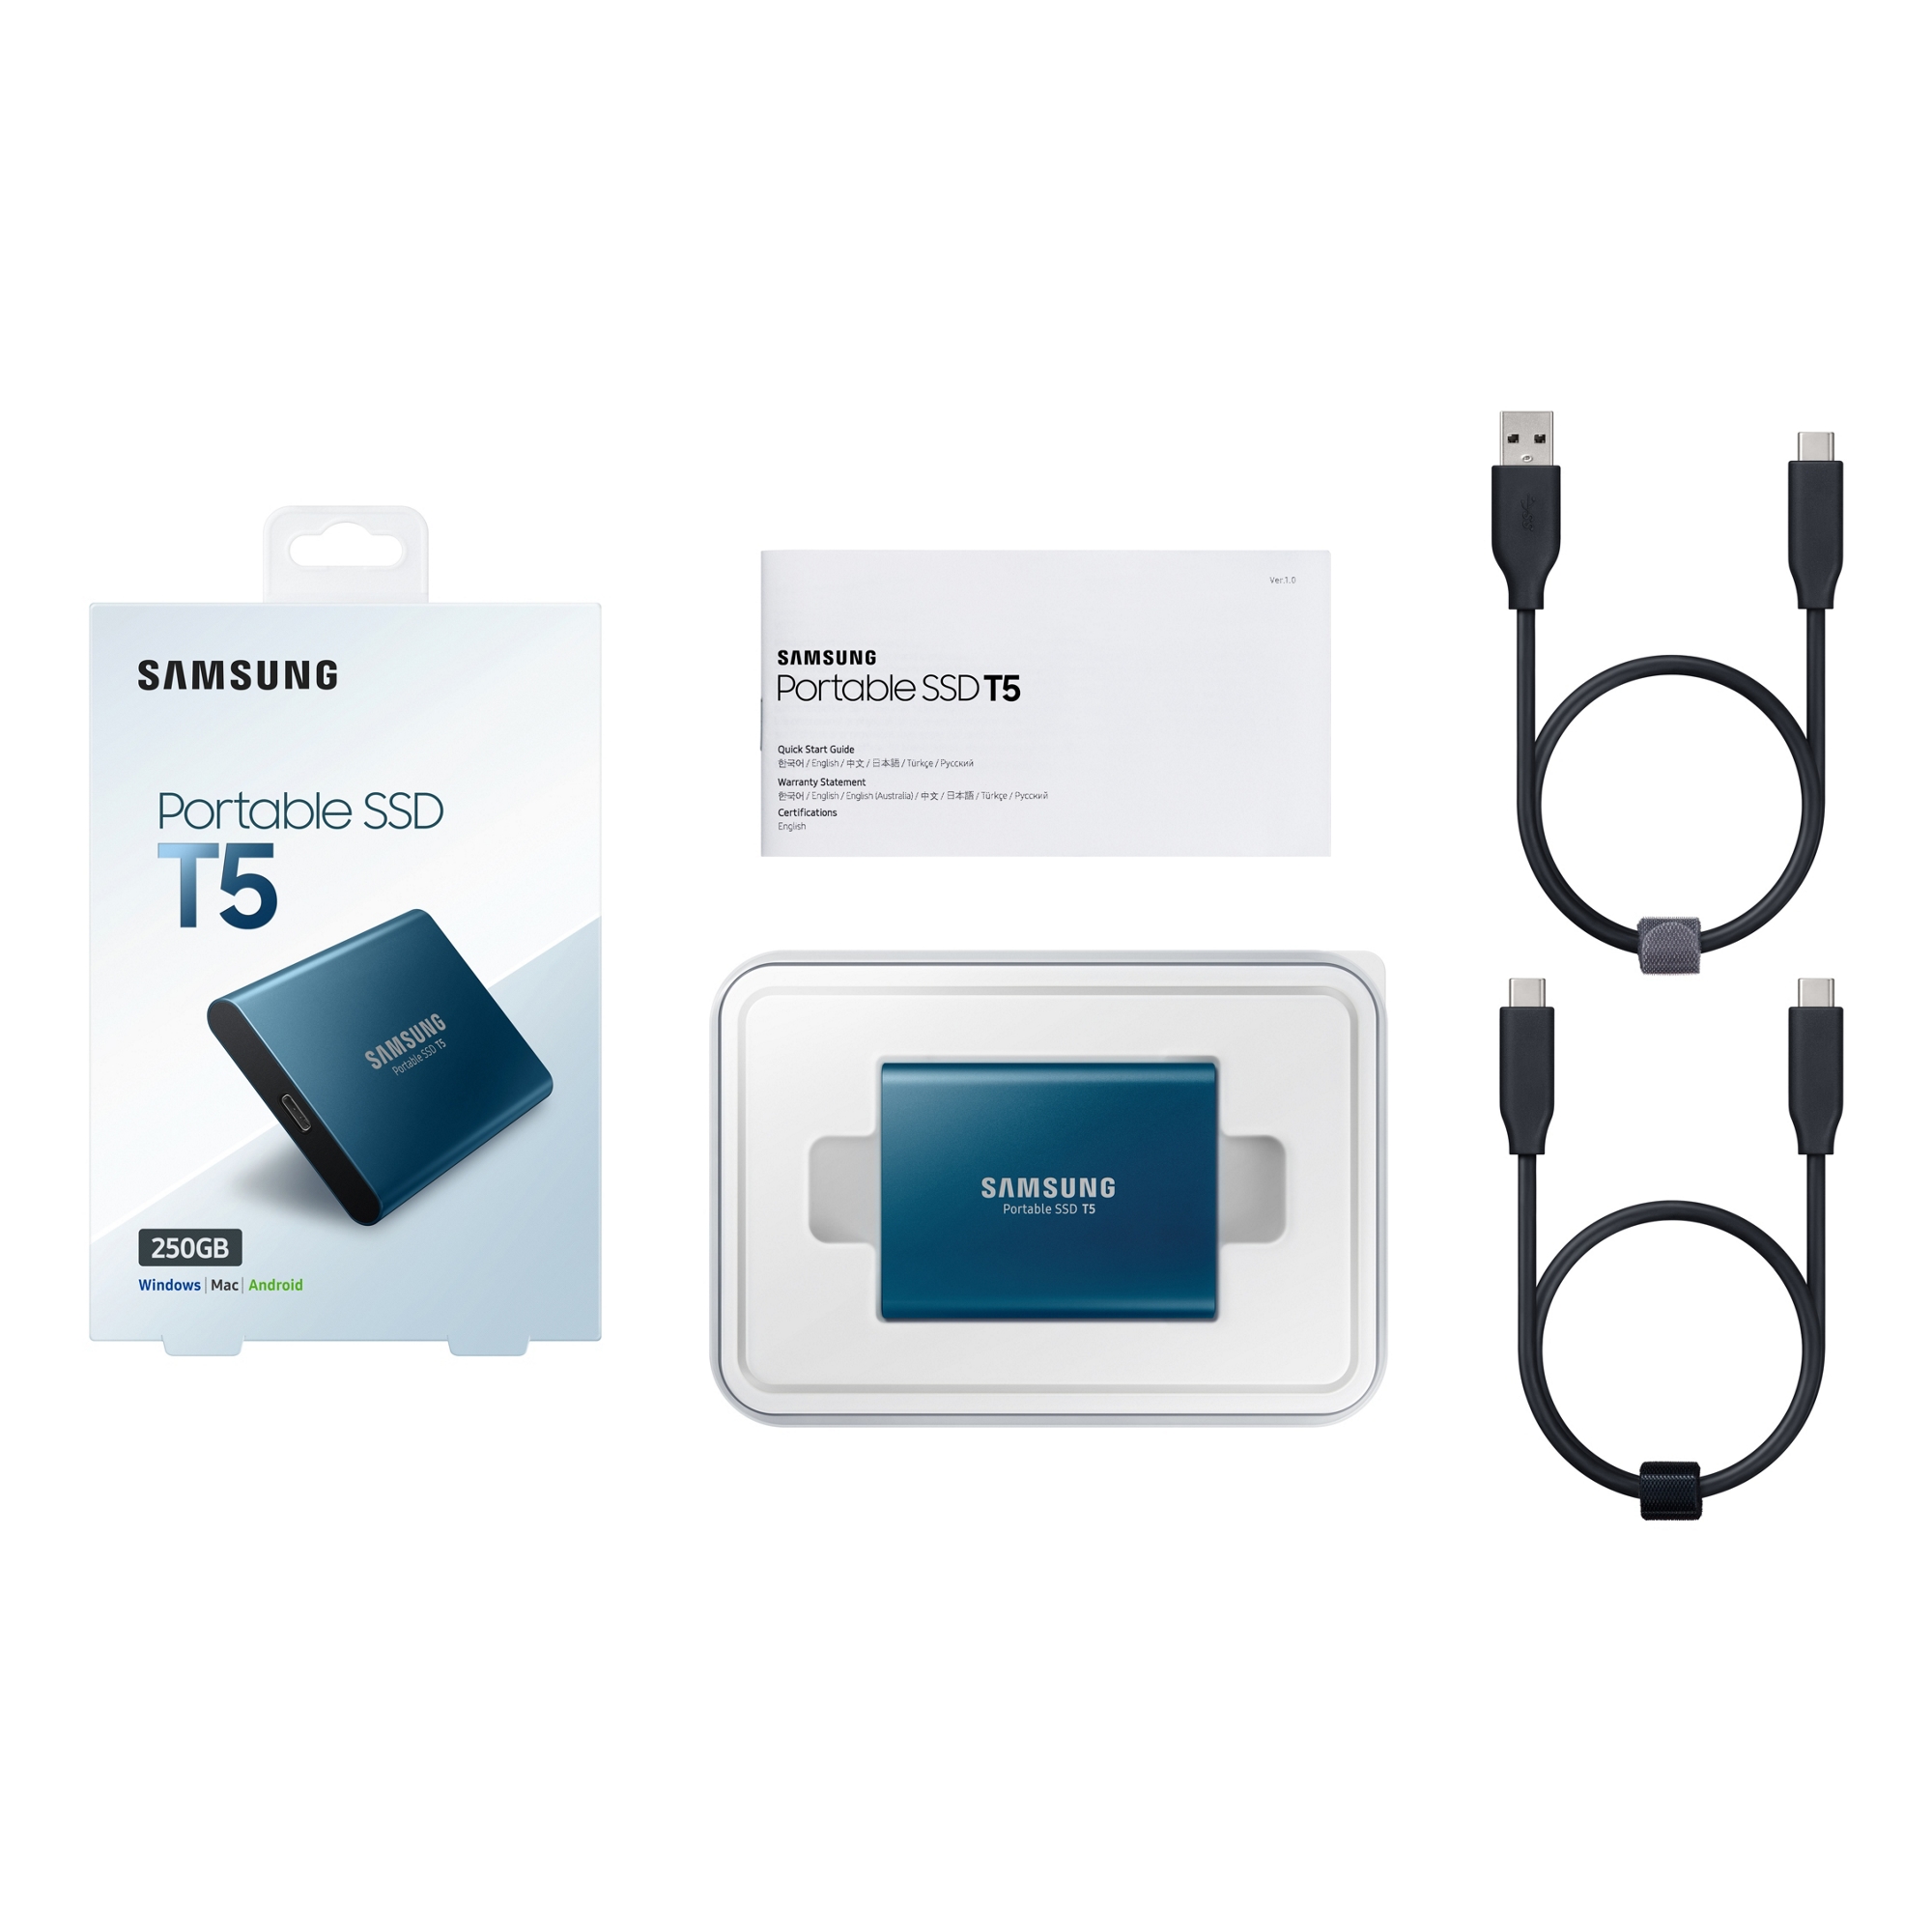 Portable SSD T5 250GB Memory & Storage - MU-PA250B/AM Samsung